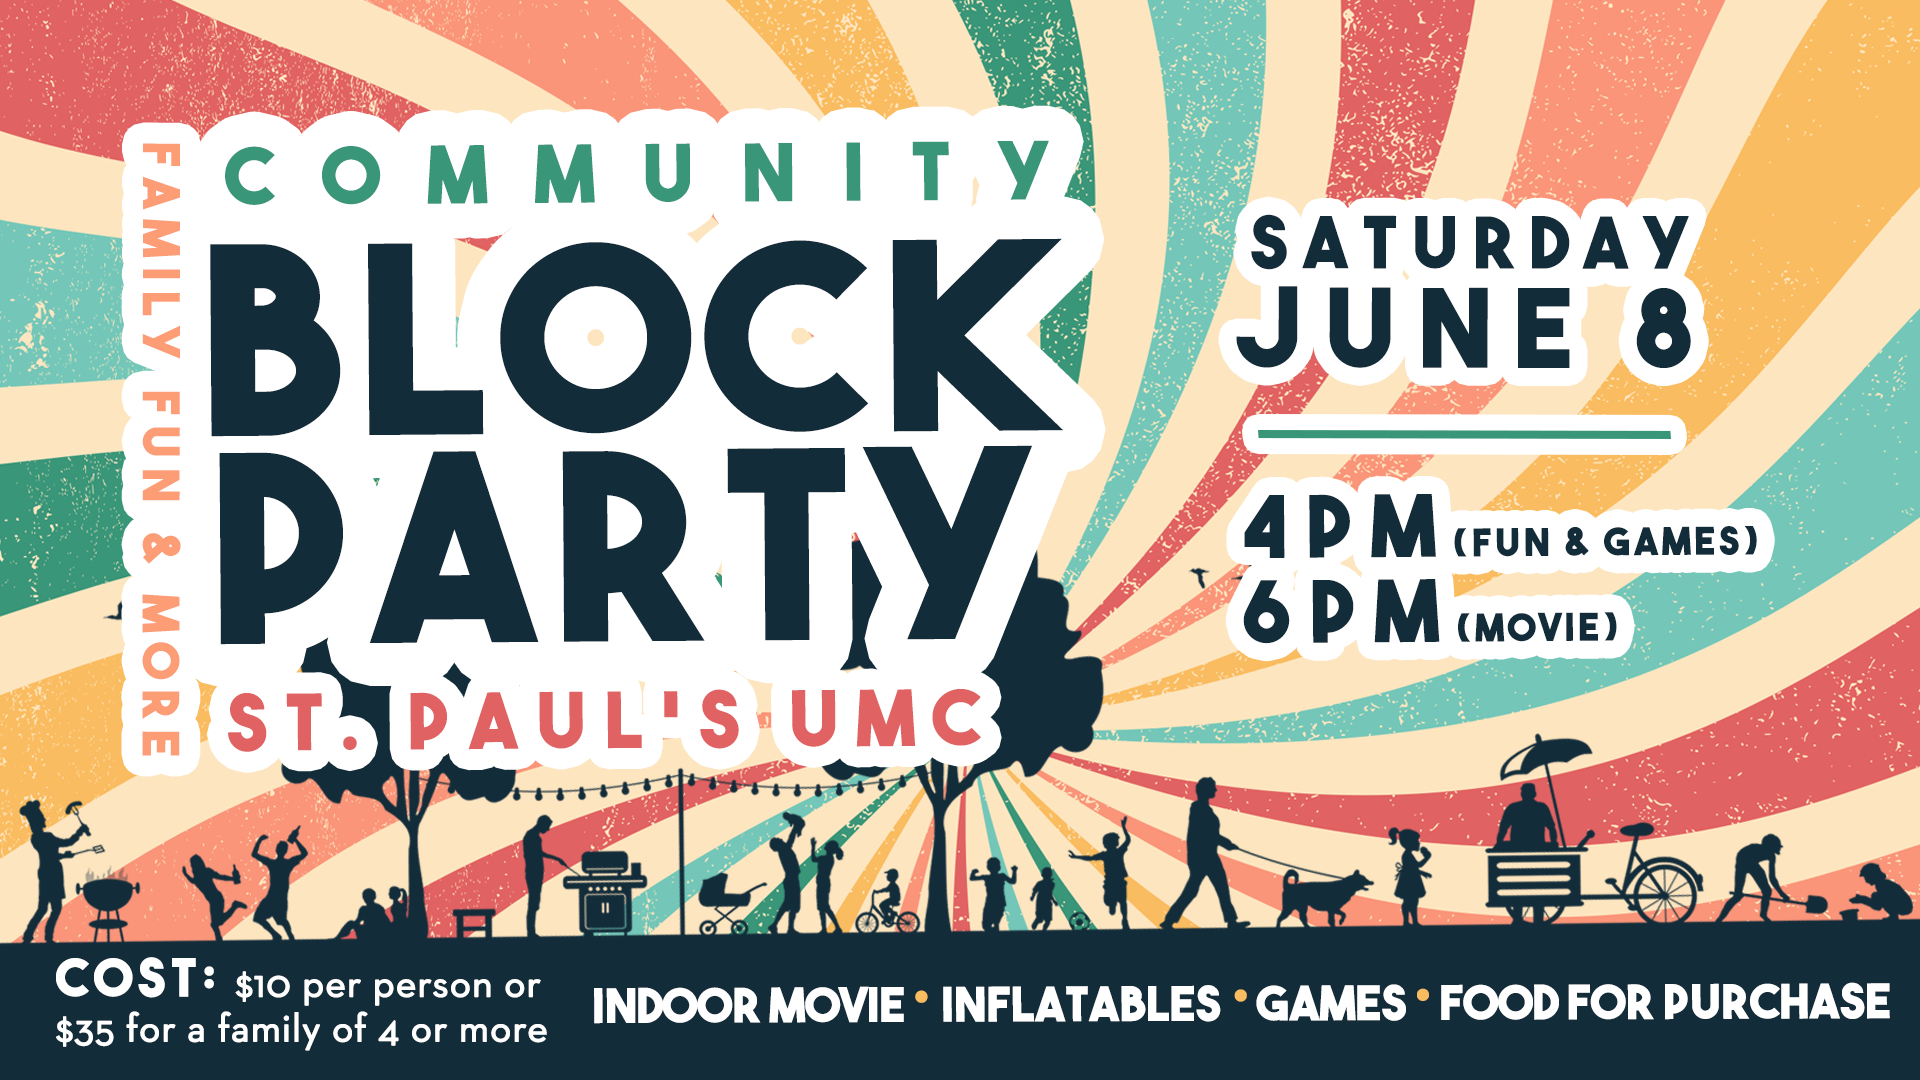 St. Paul's UMC | Community Block Party | June 8th 4:00PM